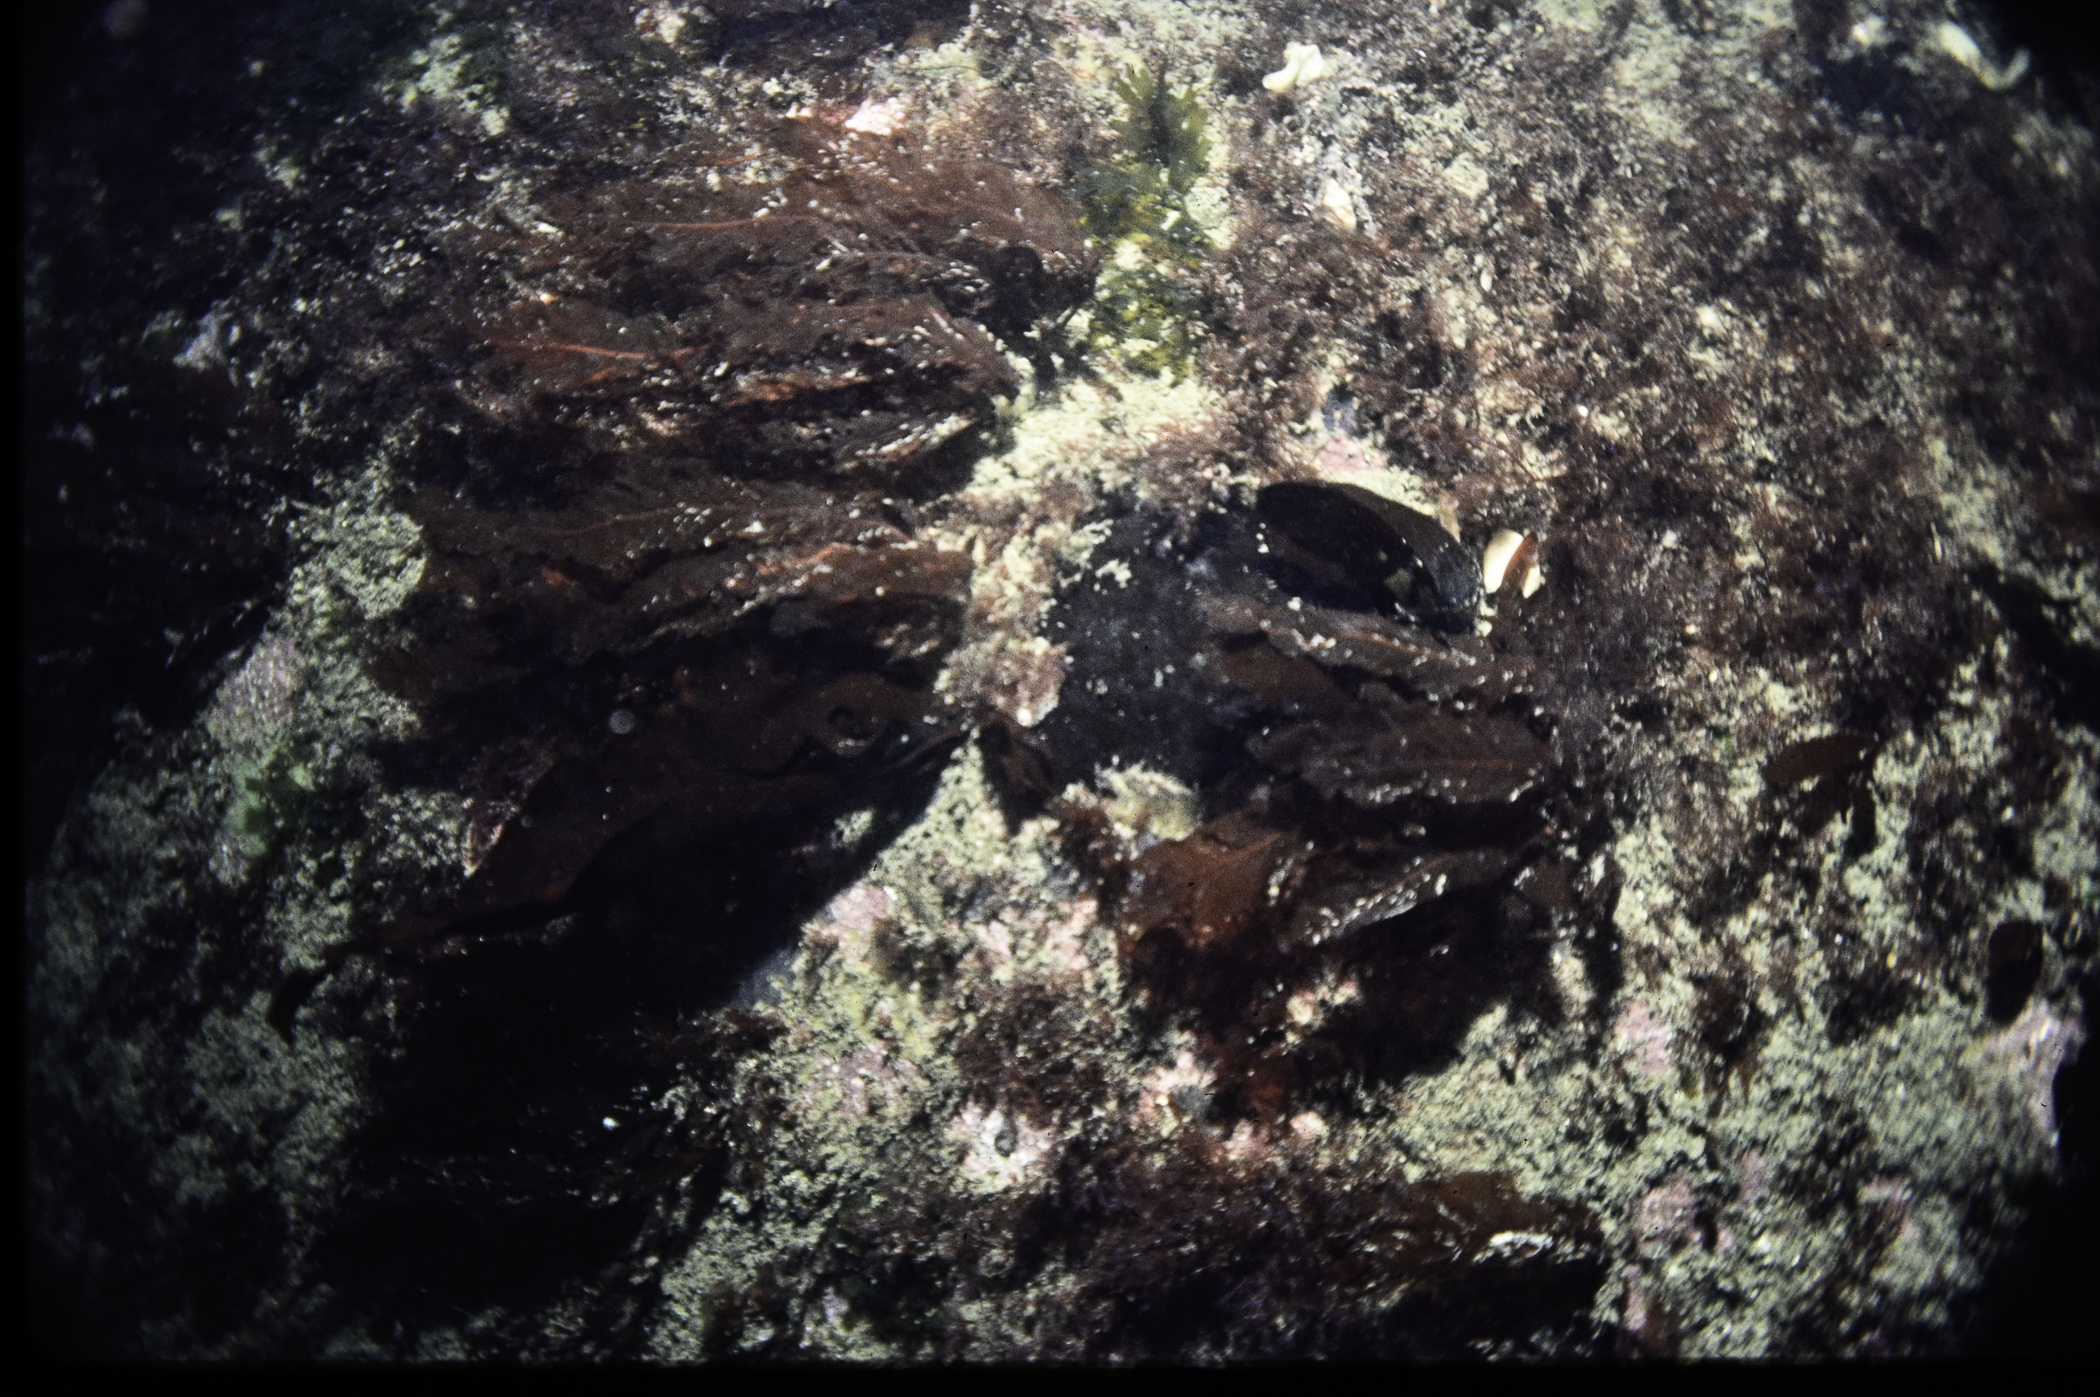 Delesseria sanguinea. Site: The Gobbins, Island Magee. 